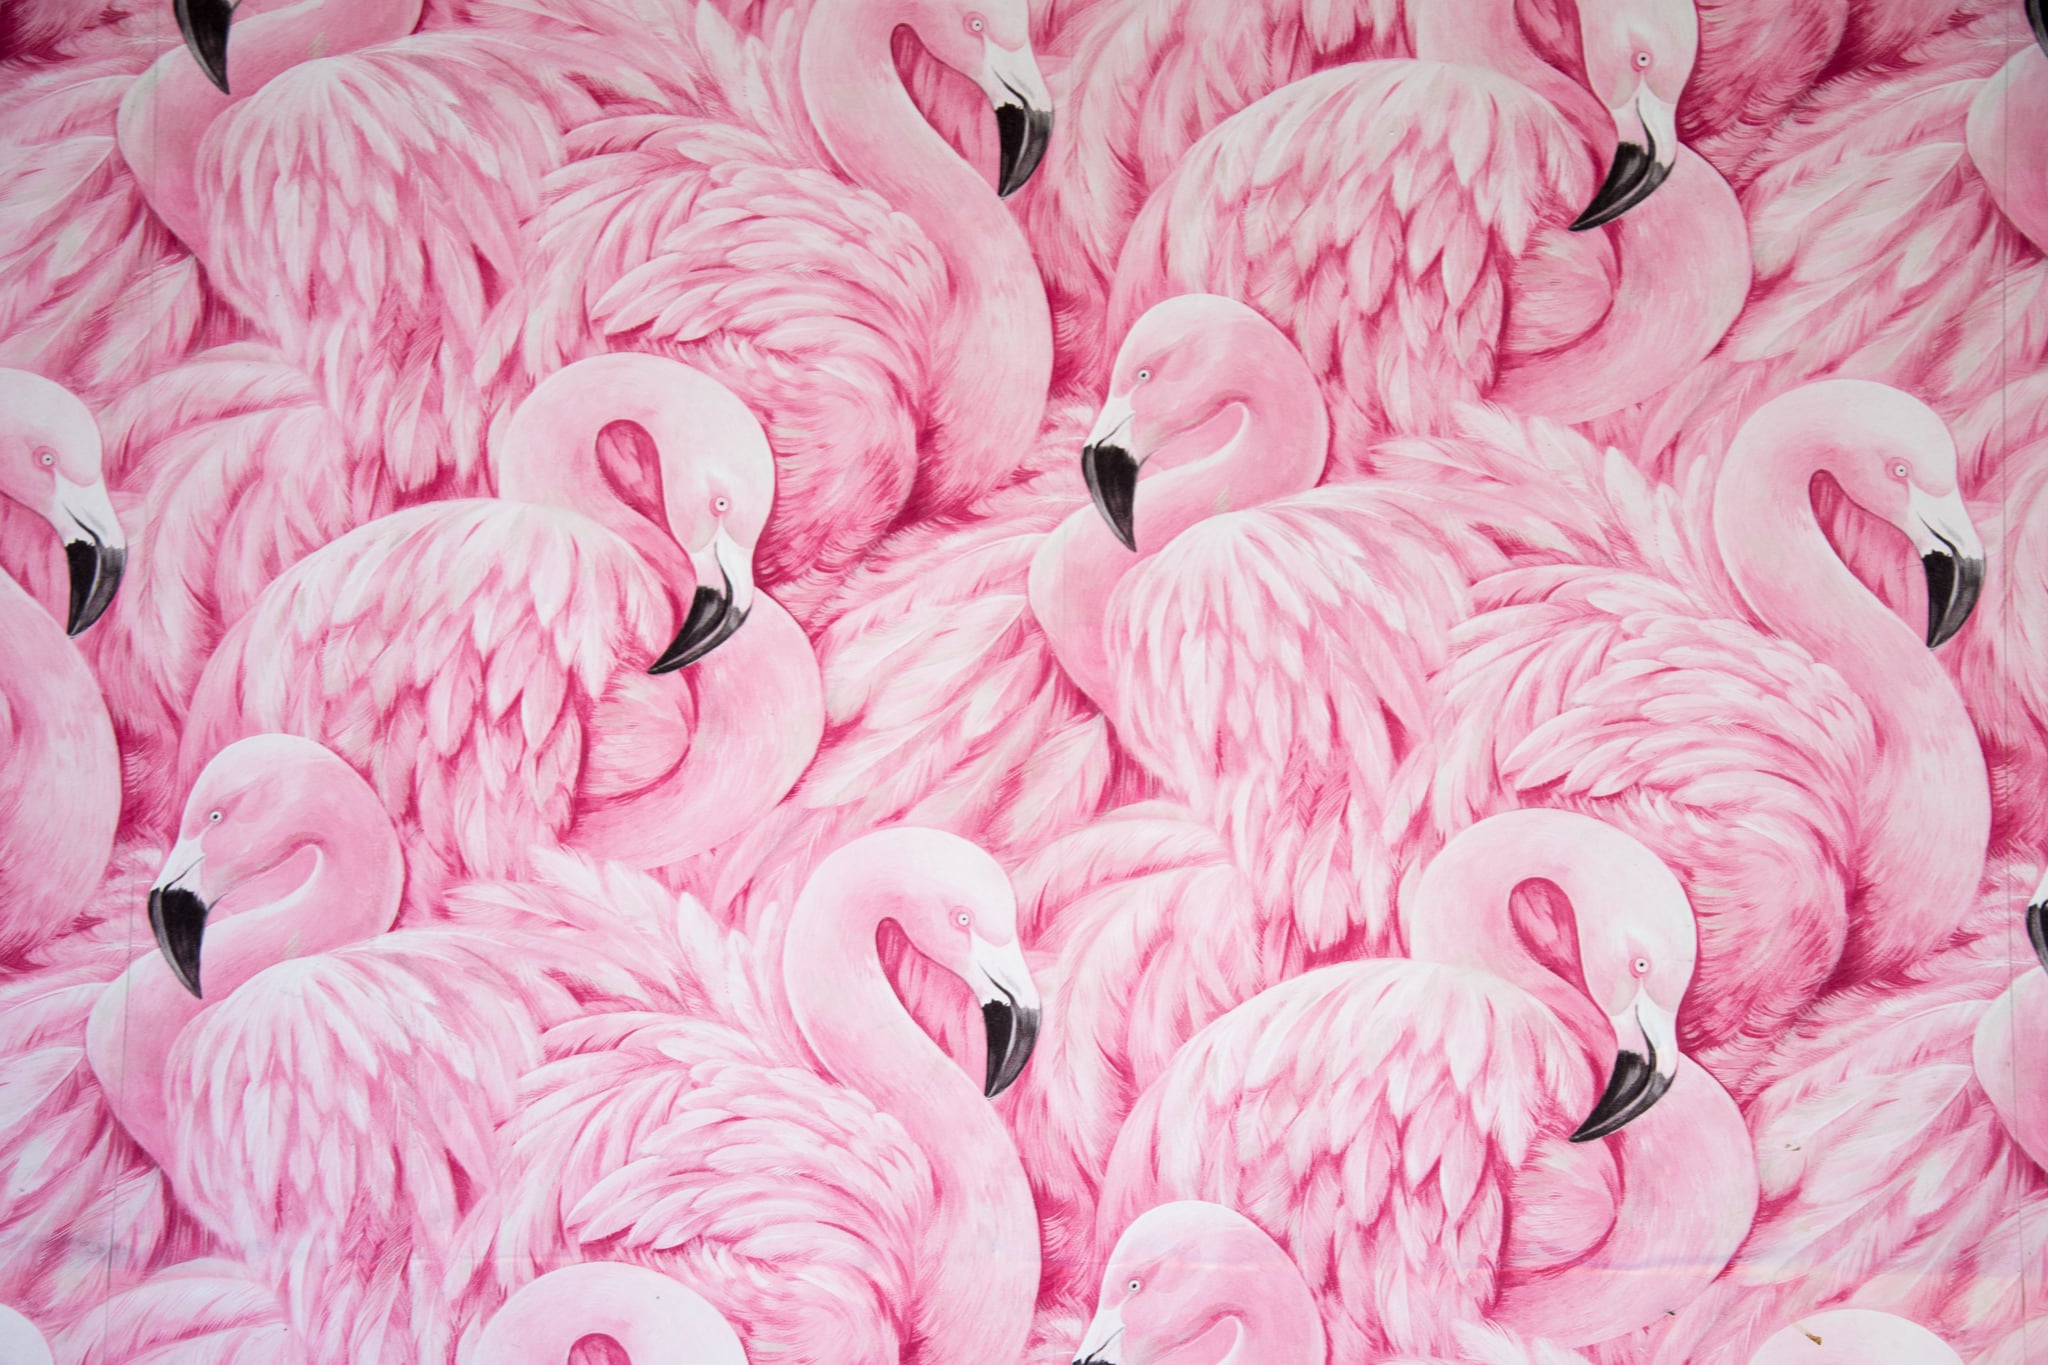 Flamingos of CaribbeanDesktop Wallpaper backgrounds free download   Wallpapers13com